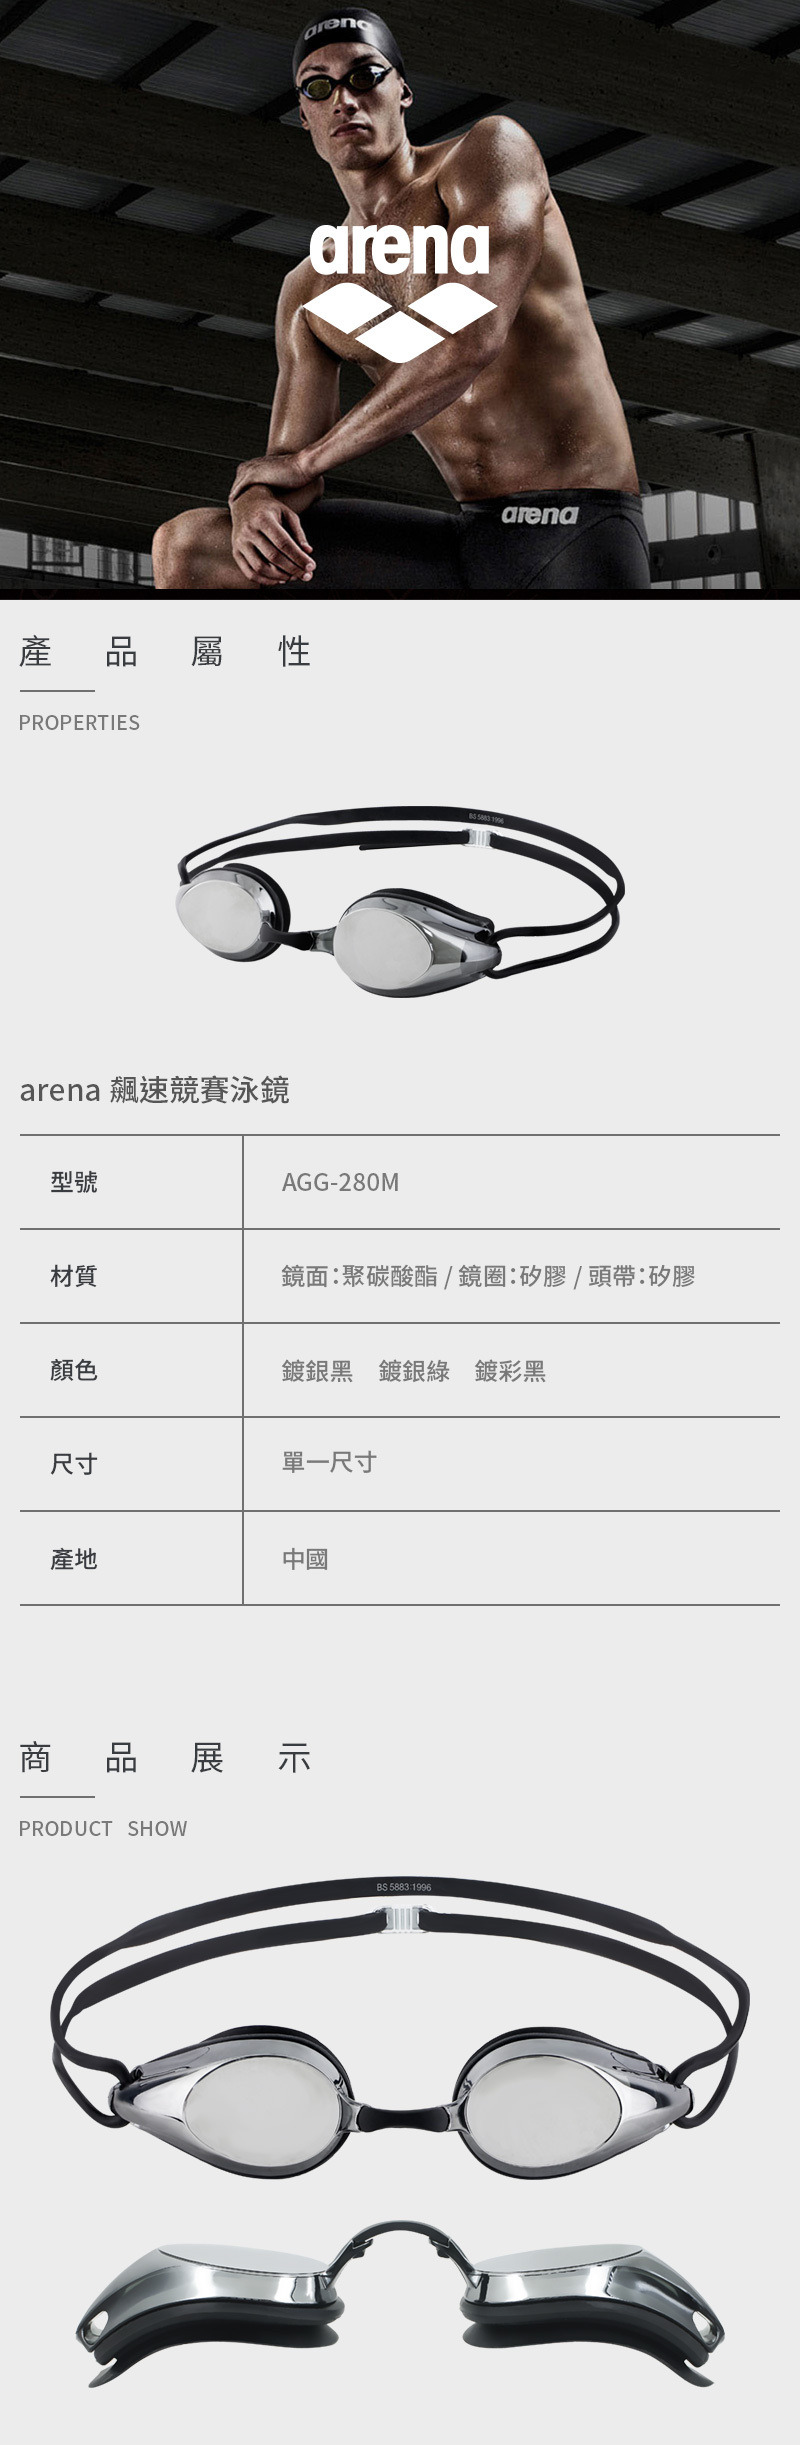 【arena】成人飆速競賽泳鏡 AGG-280M